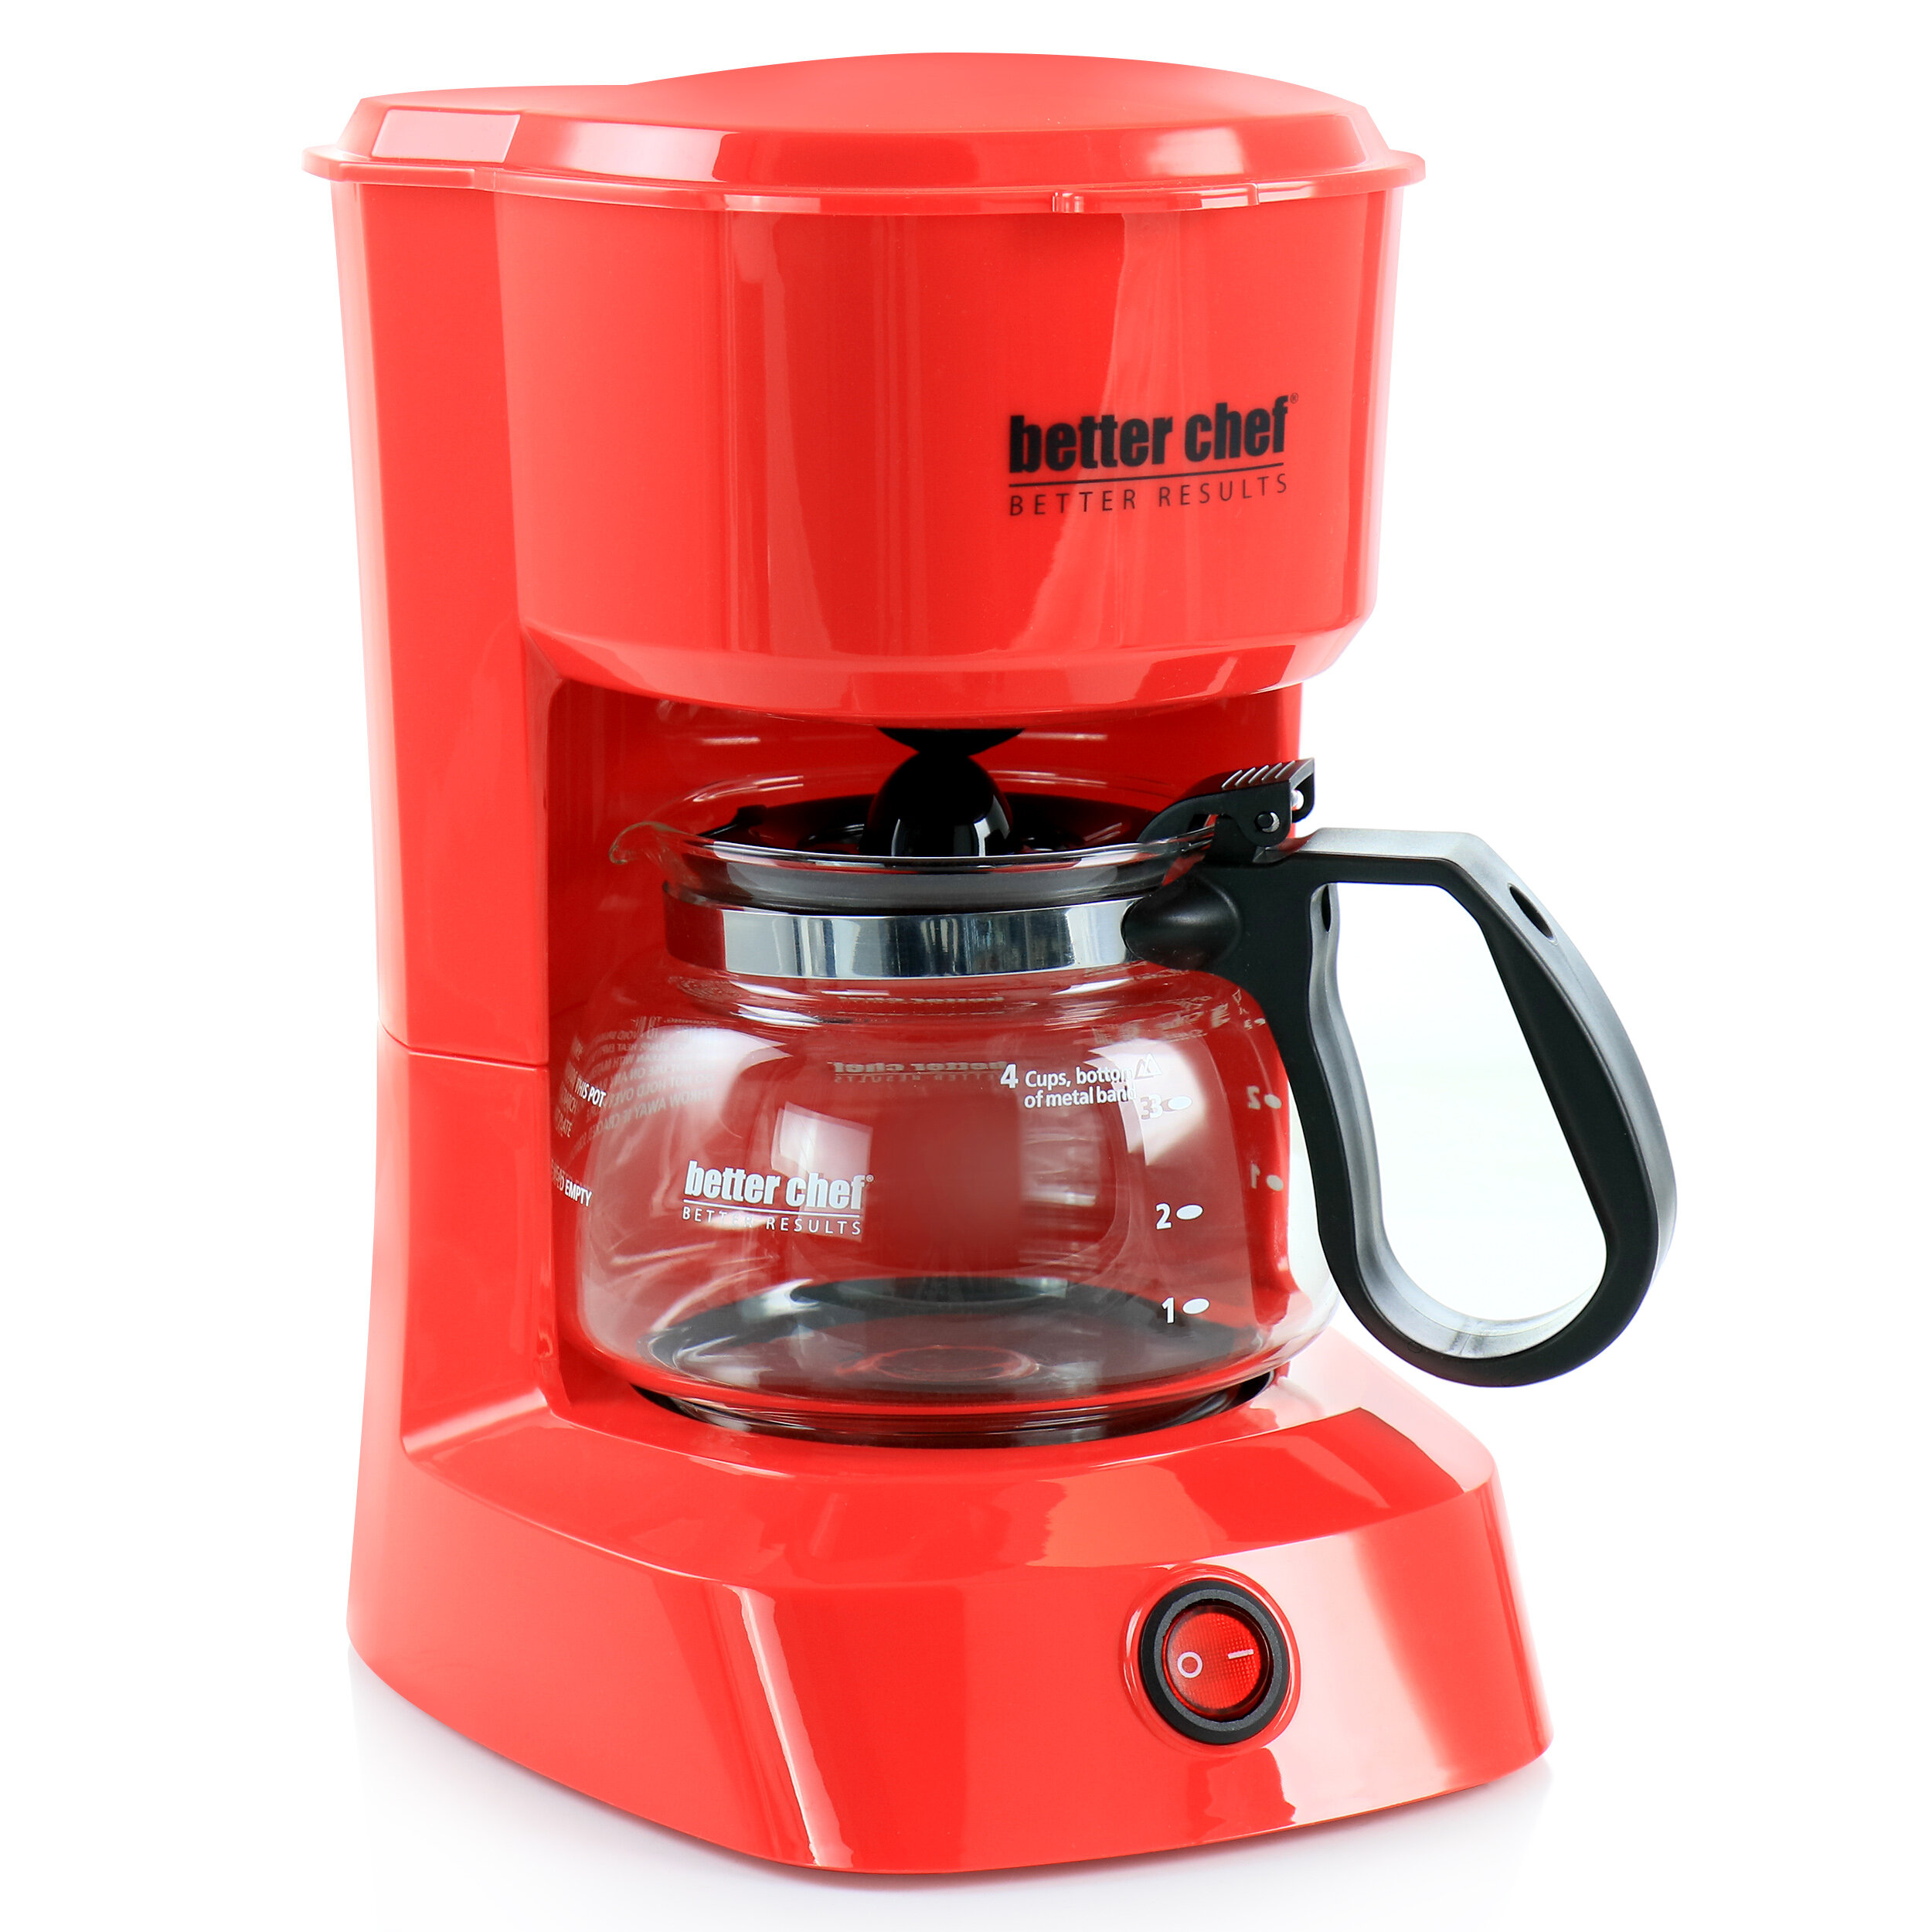 Holstein Housewares 5-Cup Coffee Maker, Metallic Red 